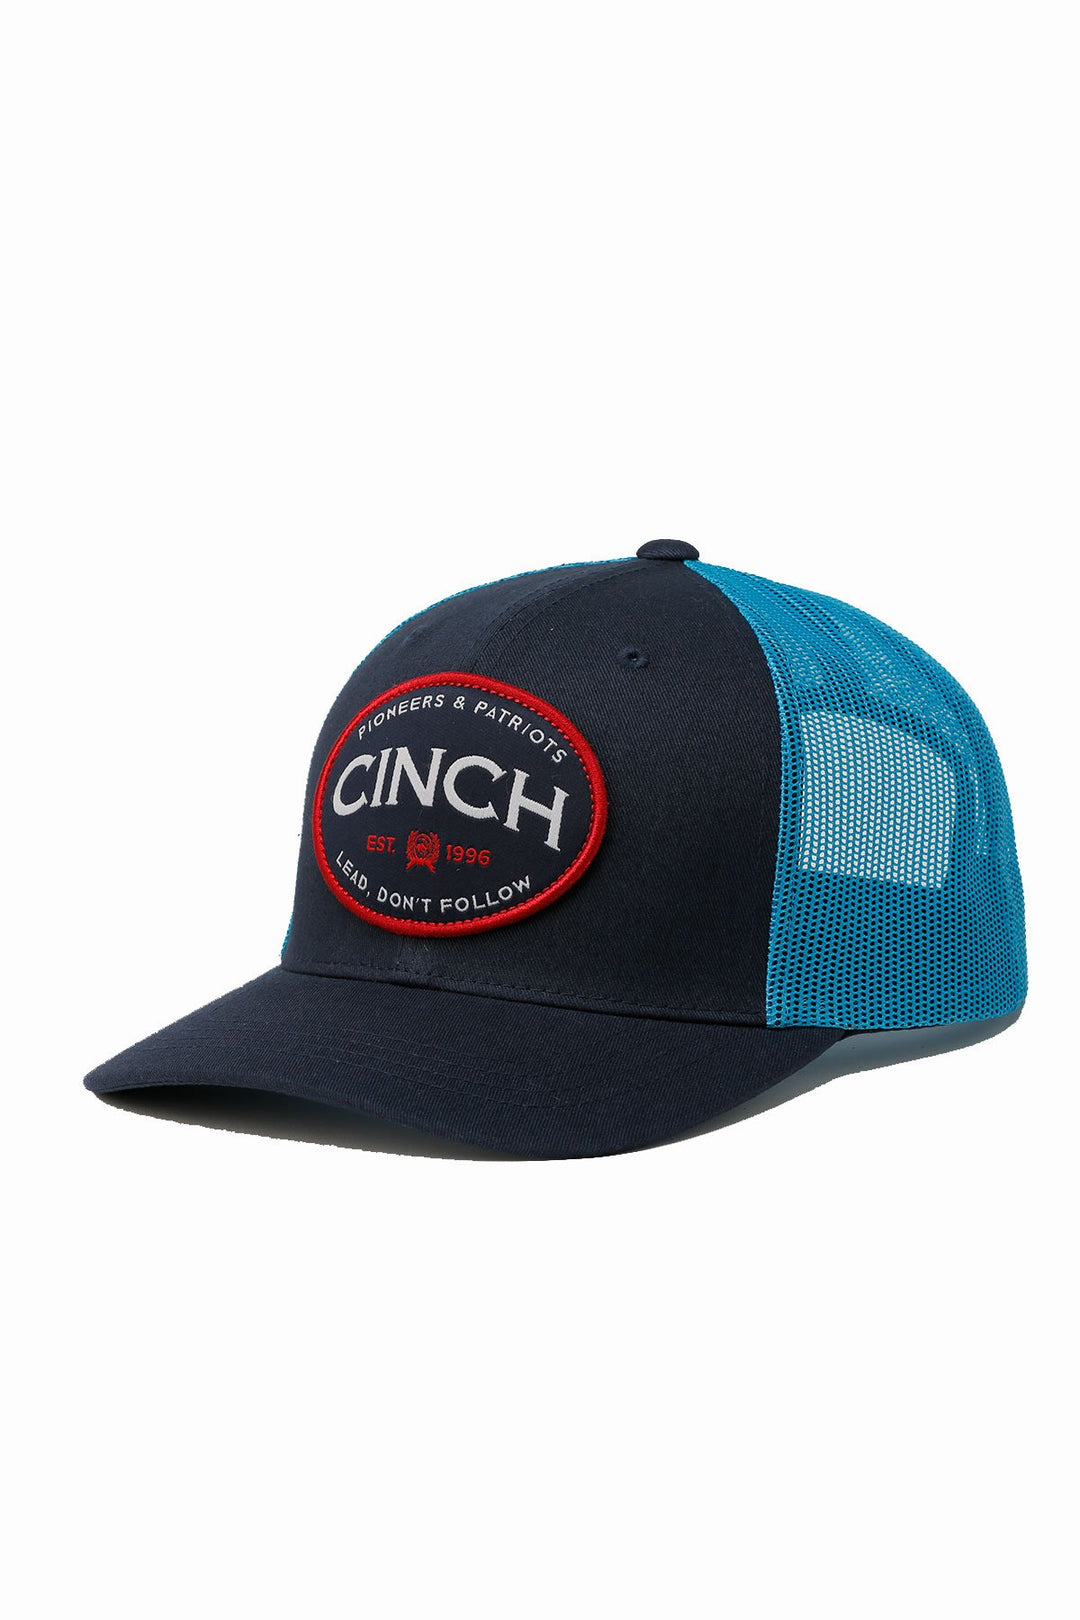 Cinch - Mens Pioneers Navy Cap